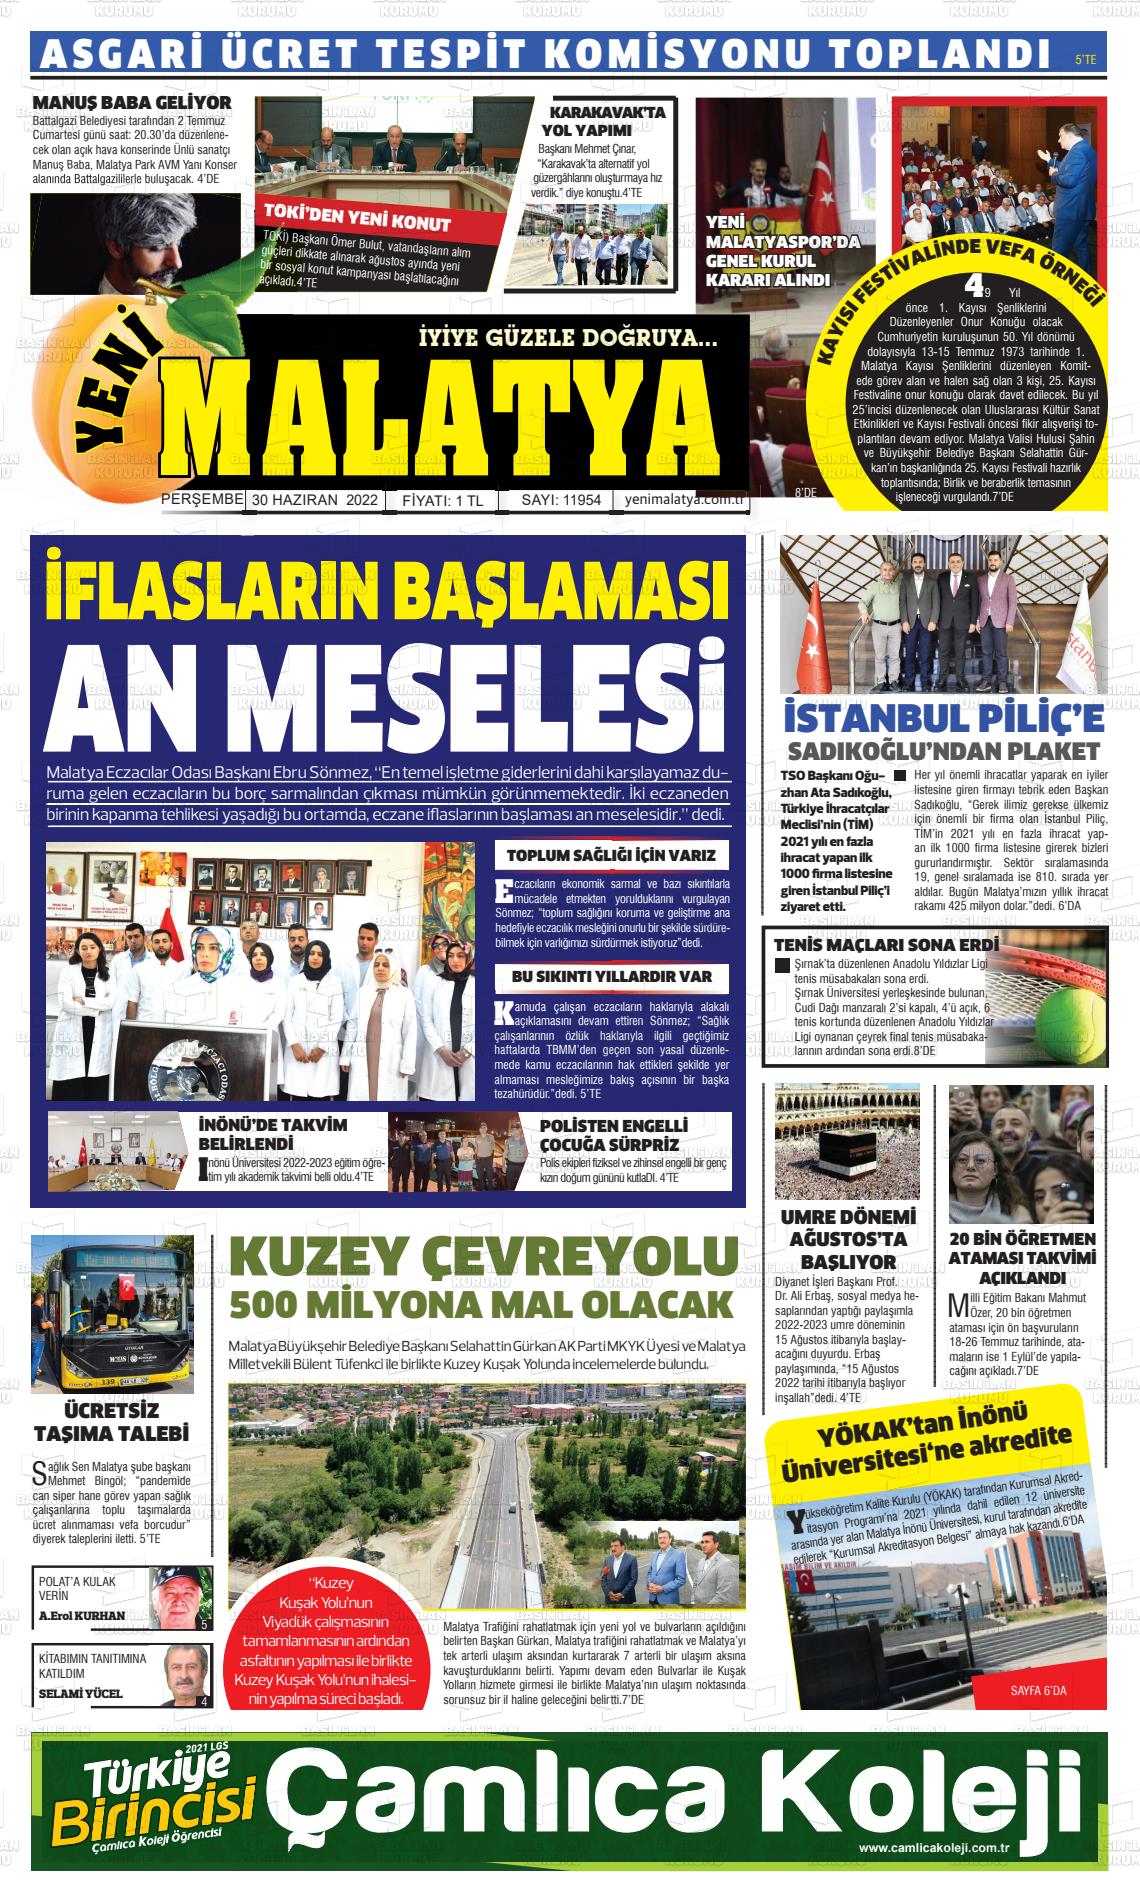 30 Haziran 2022 Yeni Malatya Gazete Manşeti